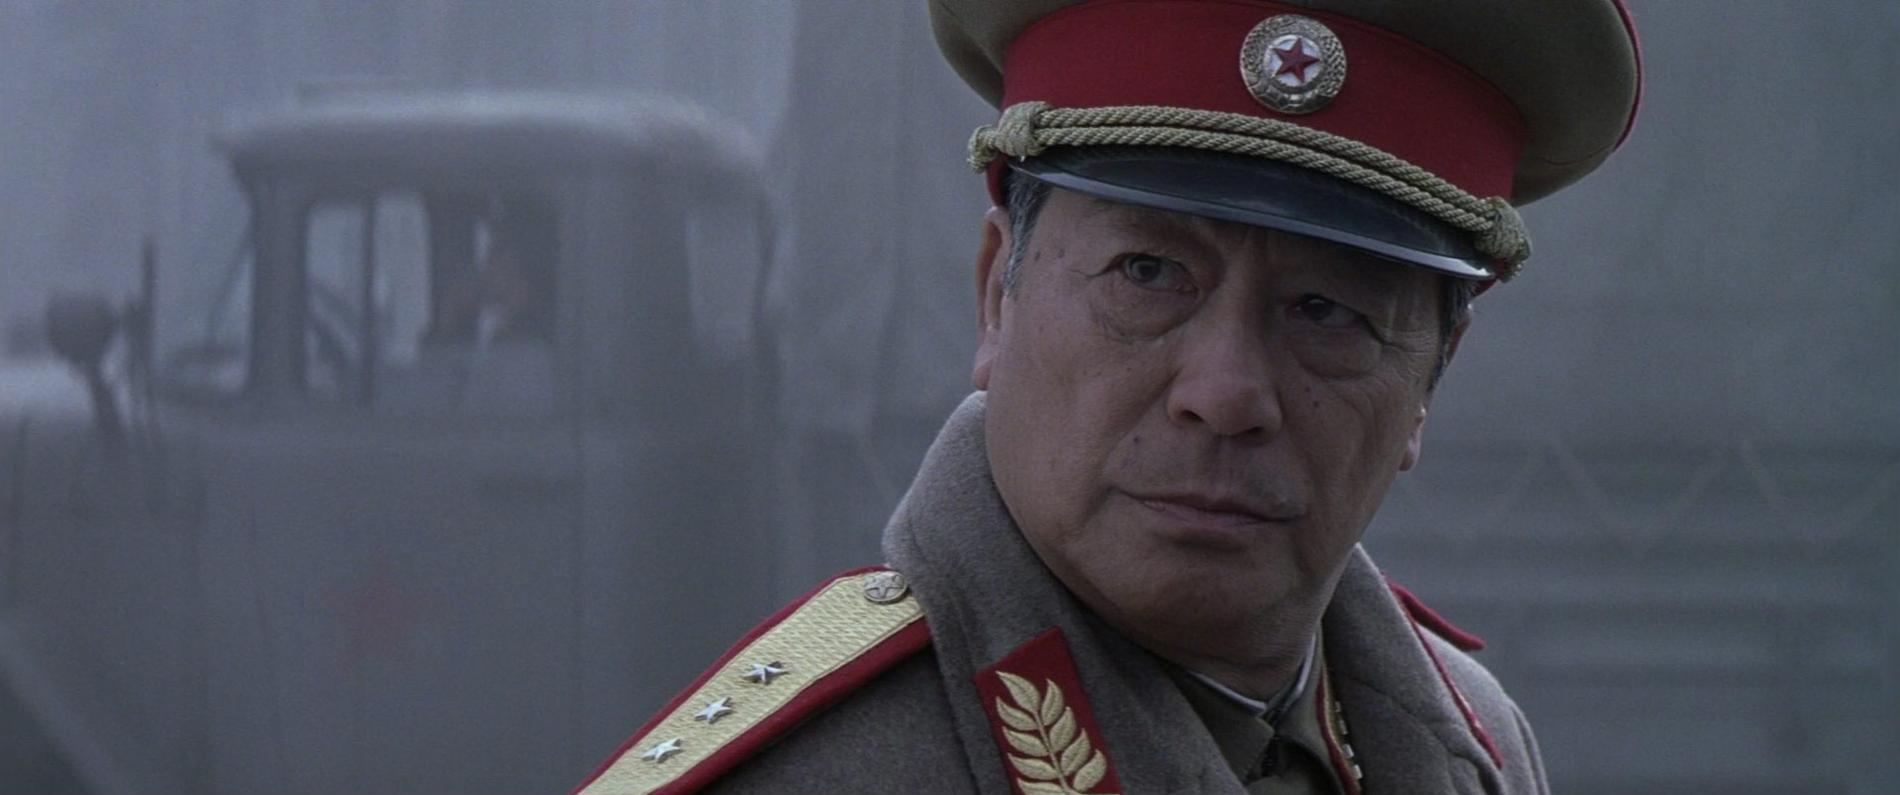 Kenneth Tsang som den nordkoreanske ”General Moon” i Bond-filmen ”Die another Day” från 2002.